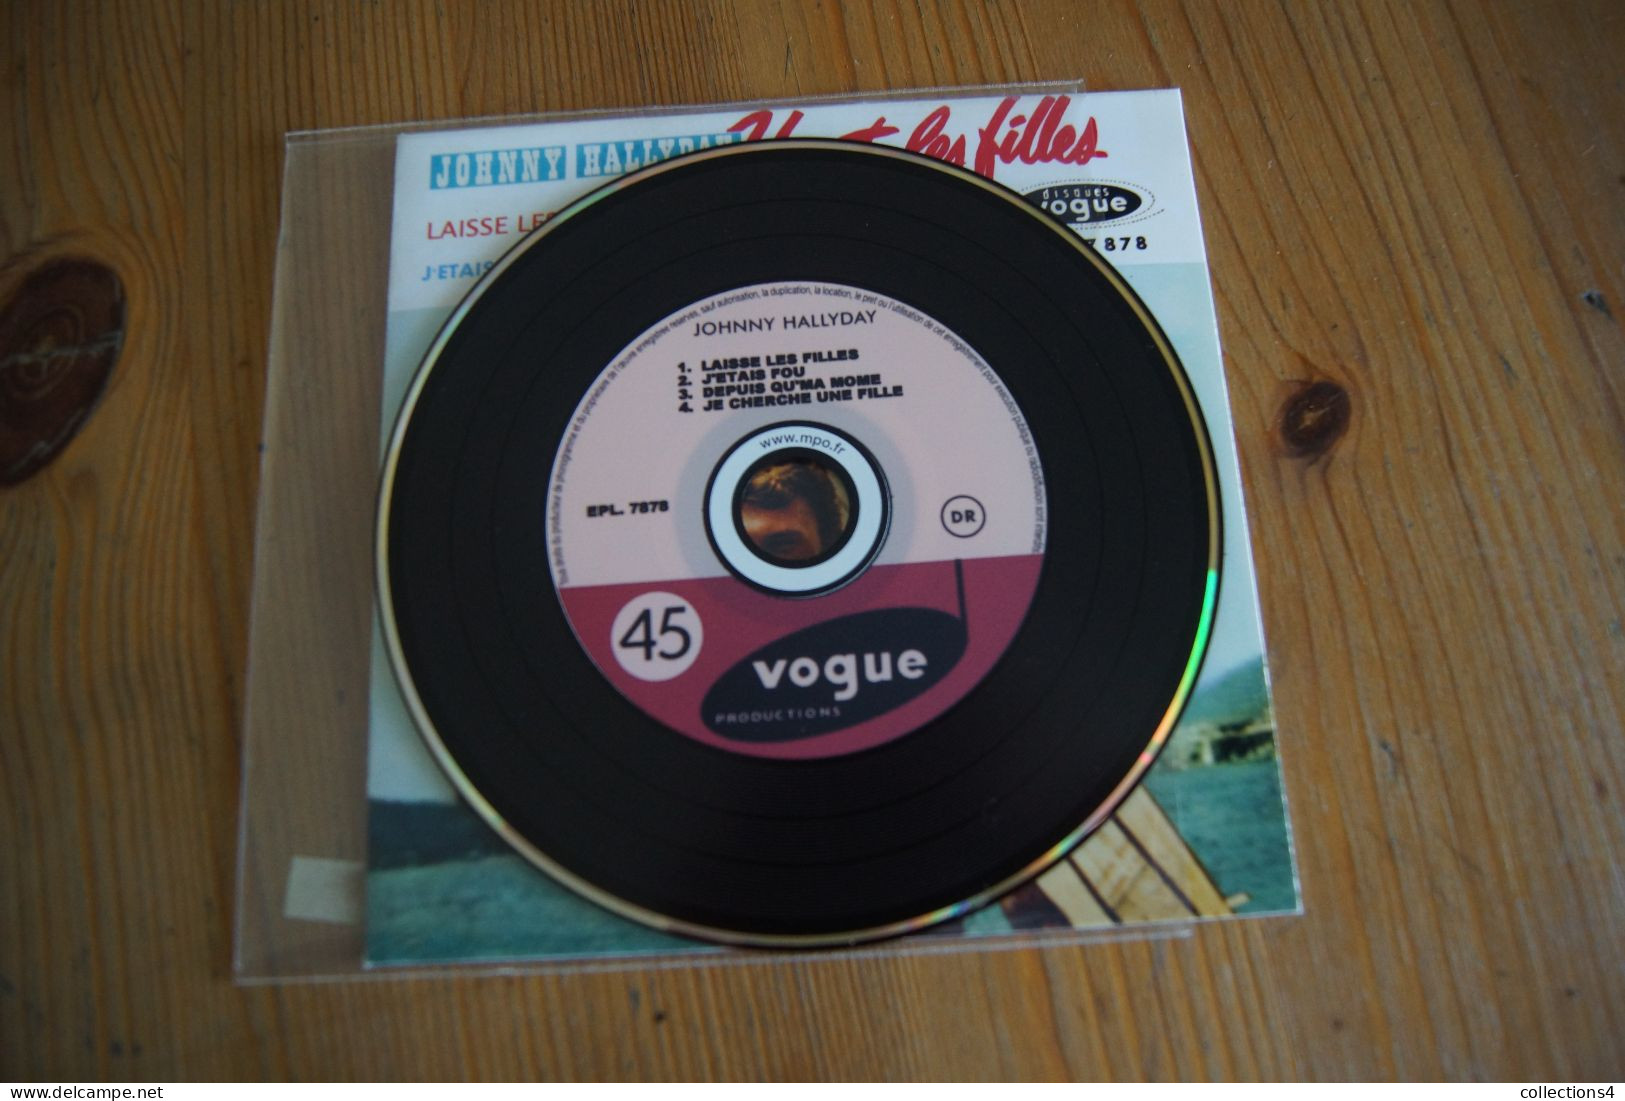 JOHNNY HALLYDAY CHANTE LES FILLES CD REPLICA DU EP DE 1961 - Rock